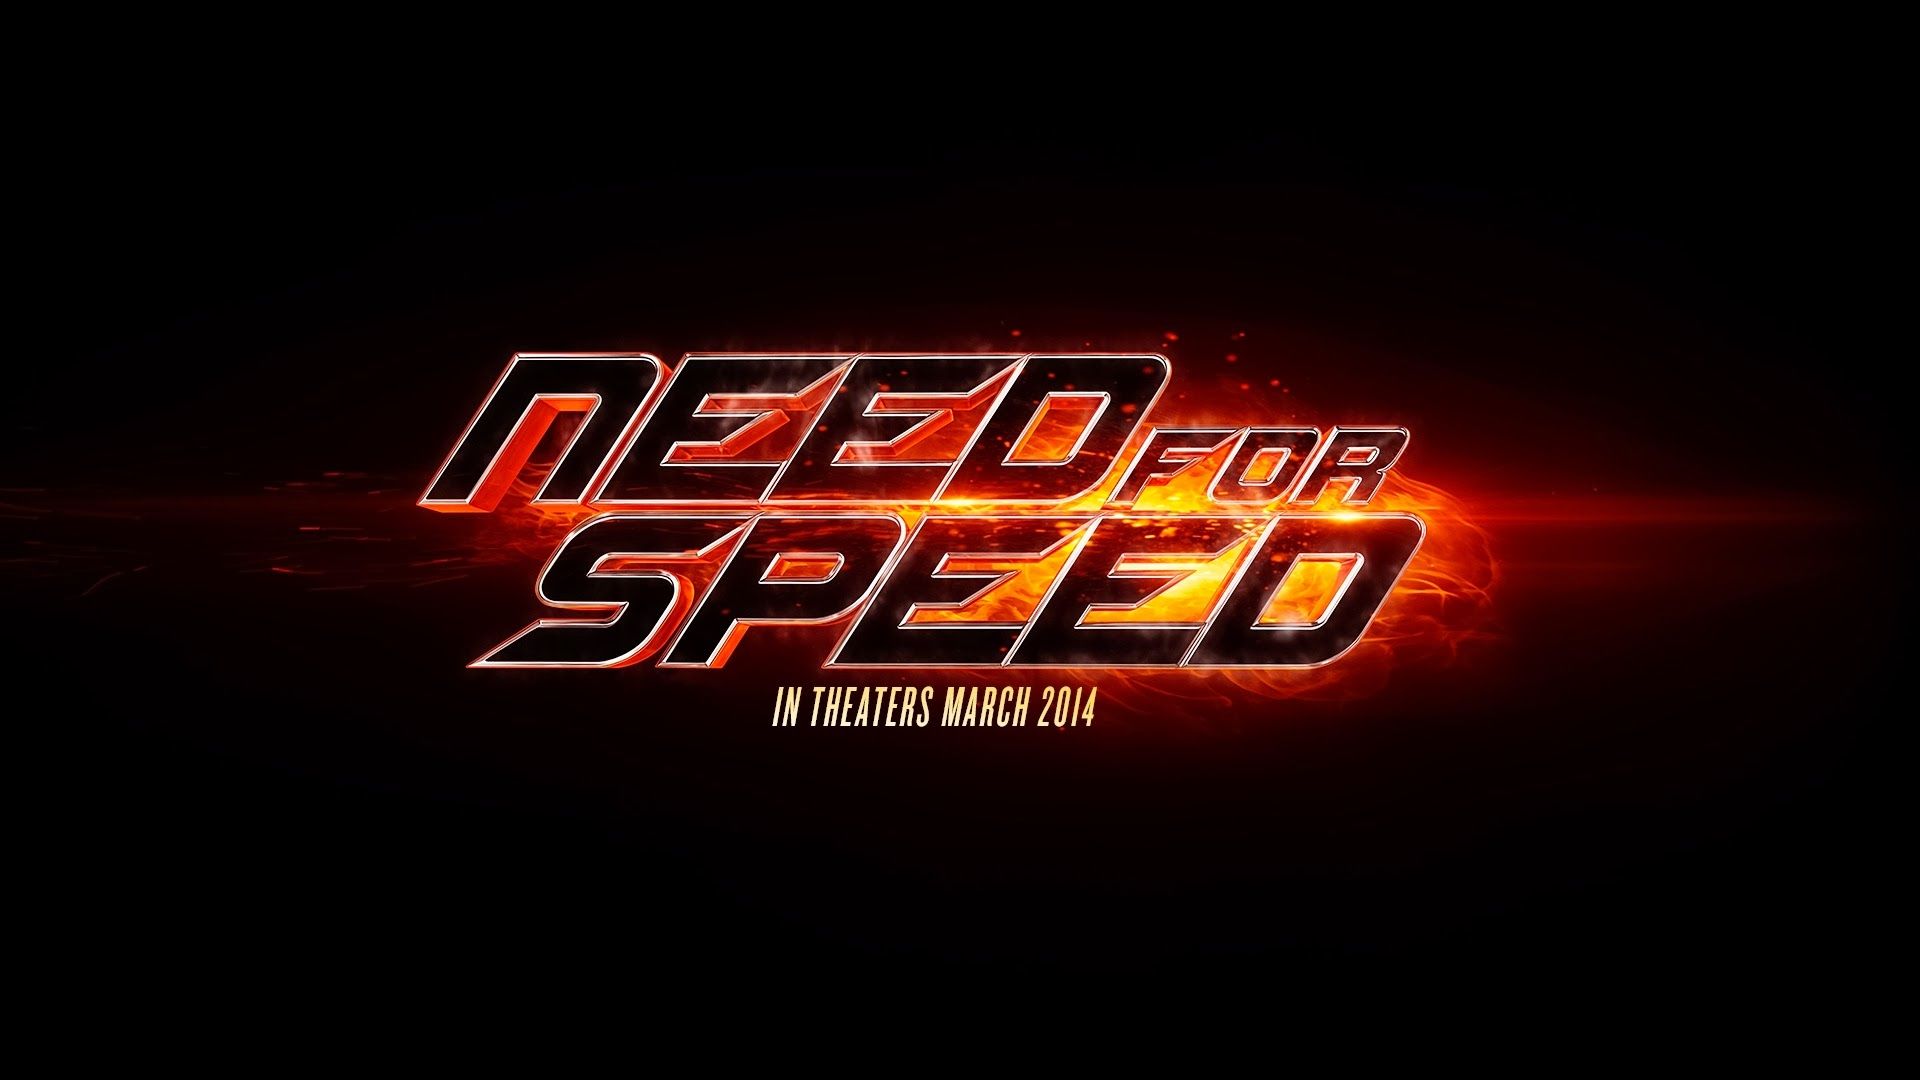 Need for Speed Desktop Wallpaper, High Definition, High Quality, Widescreen